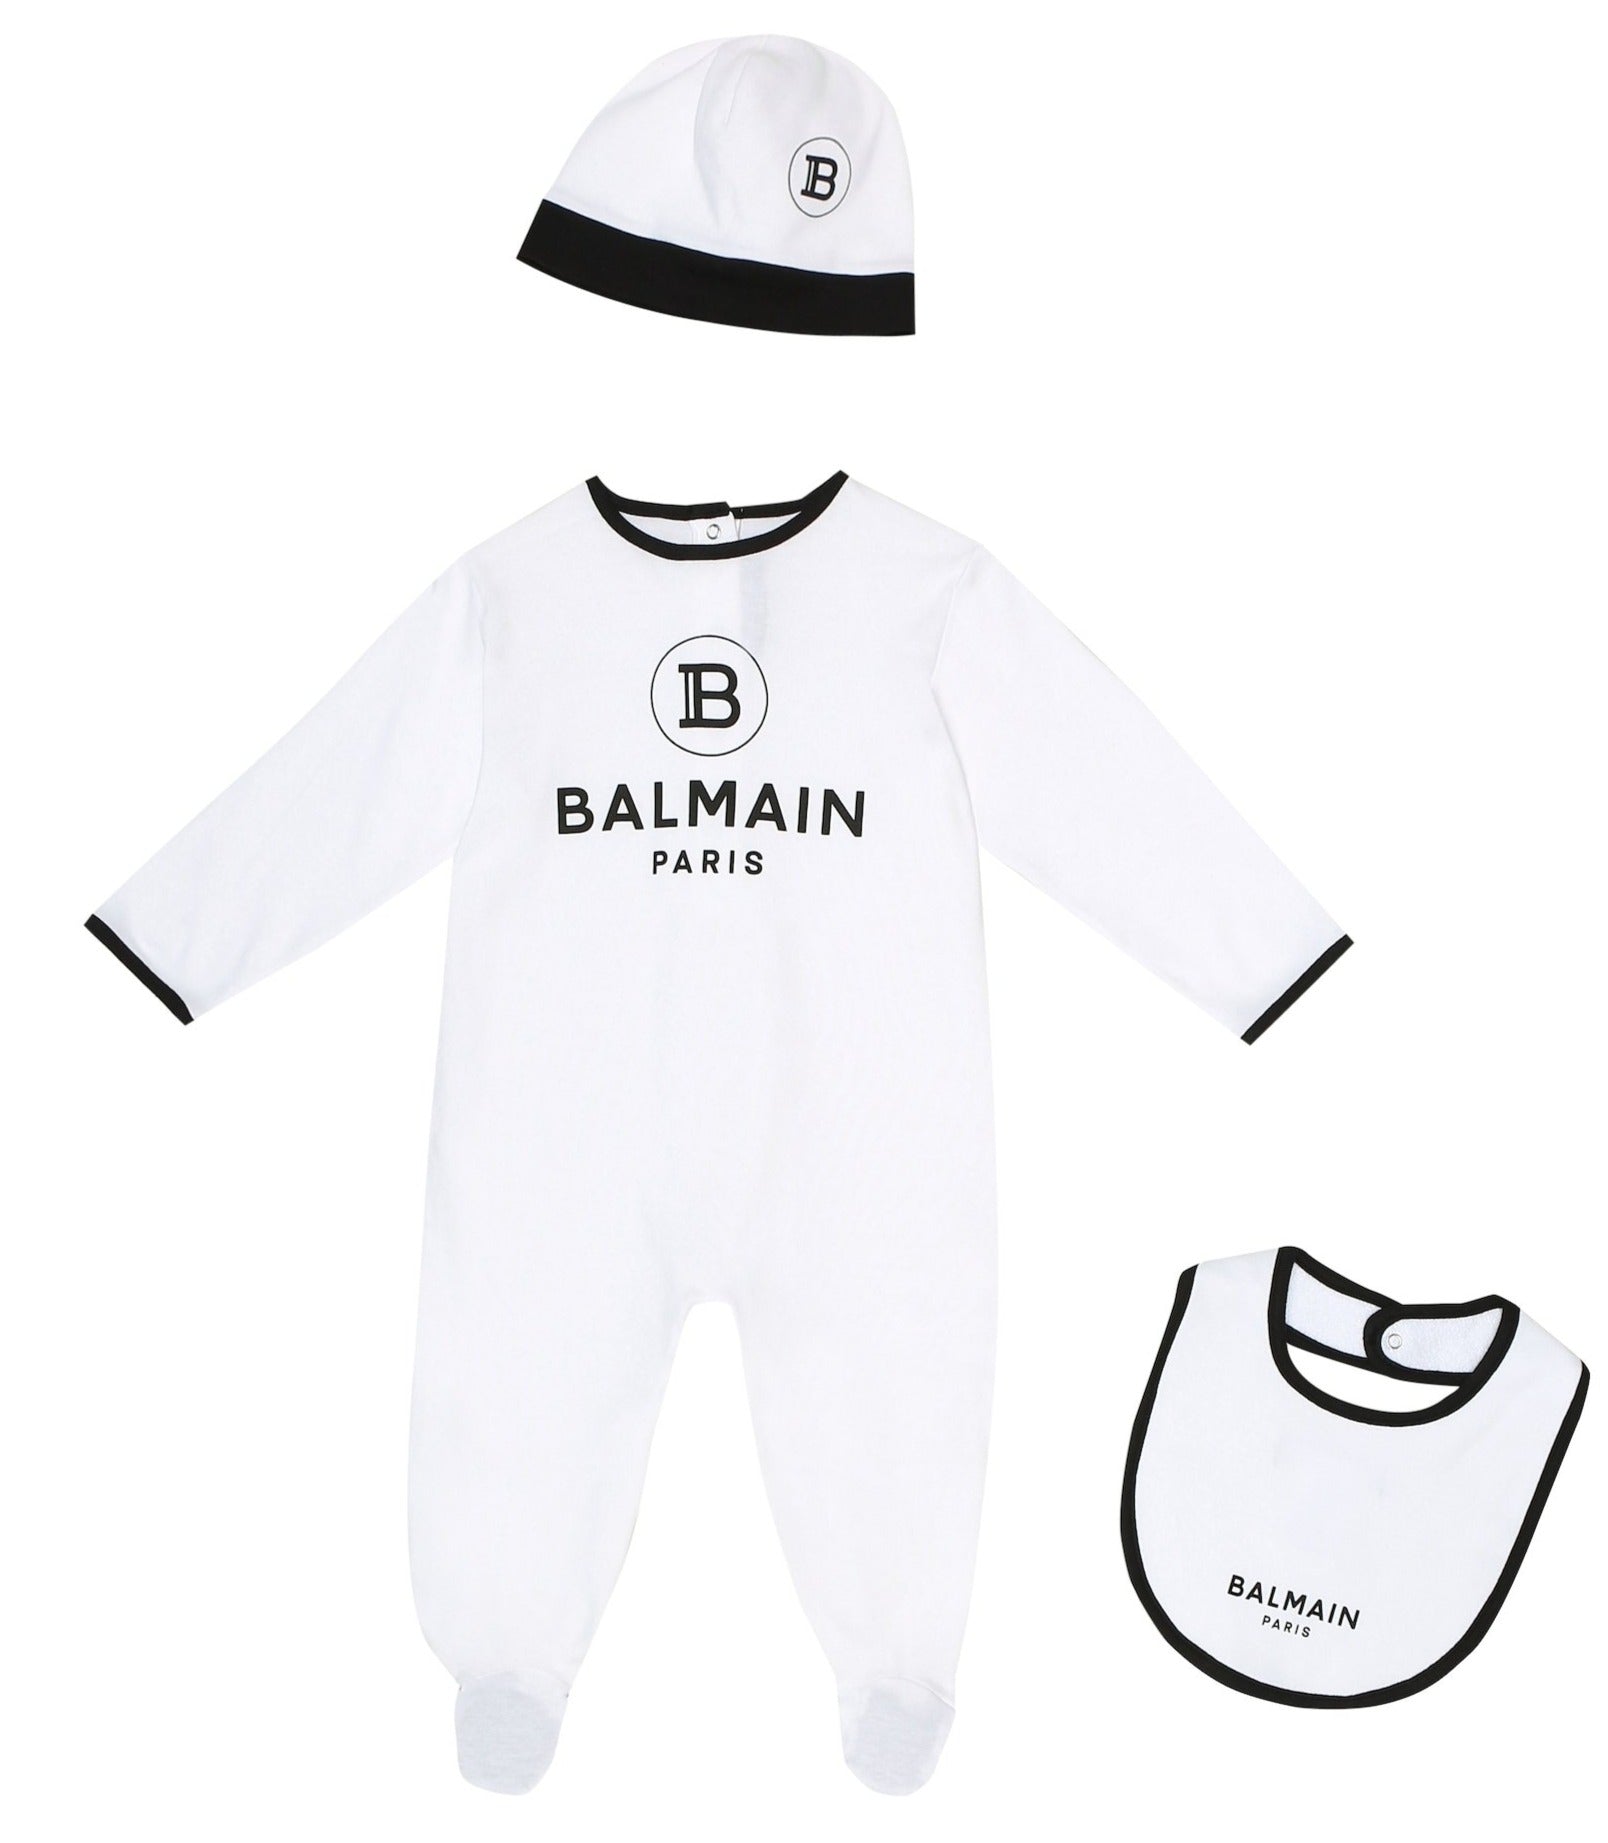 balmain children's clothing